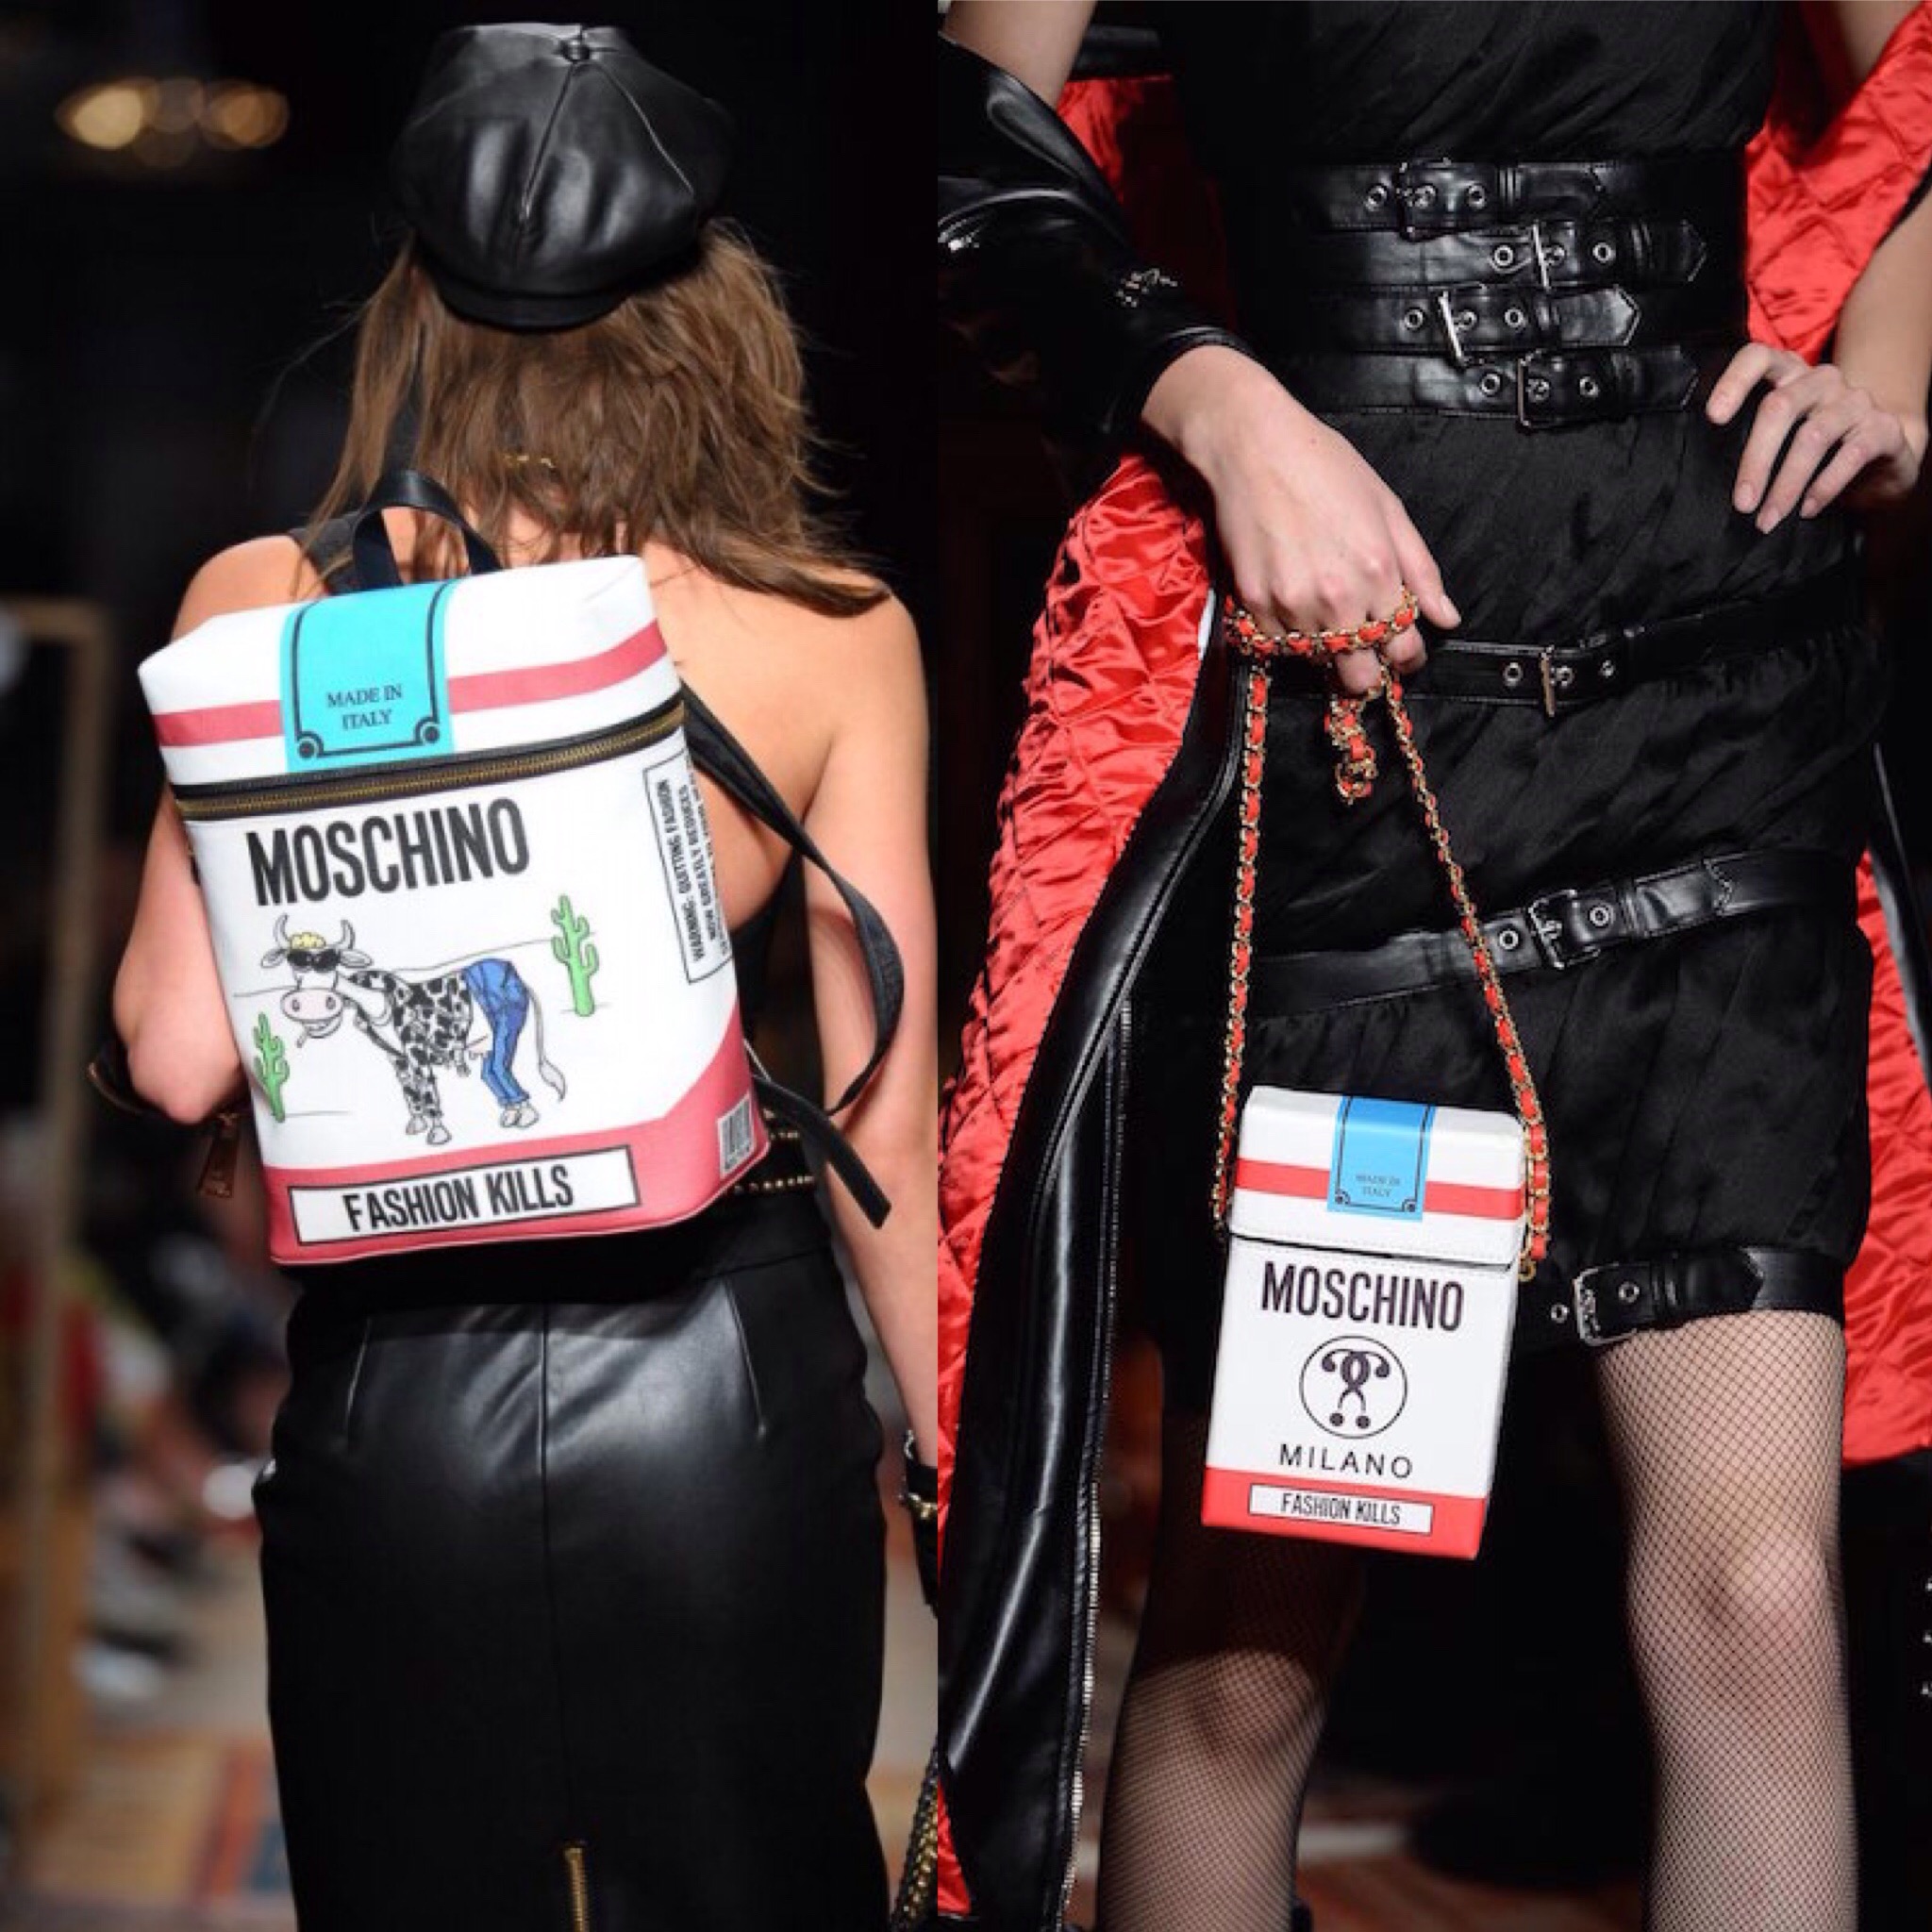 Fashion KILLS jeremy scott per Moschino fw2016